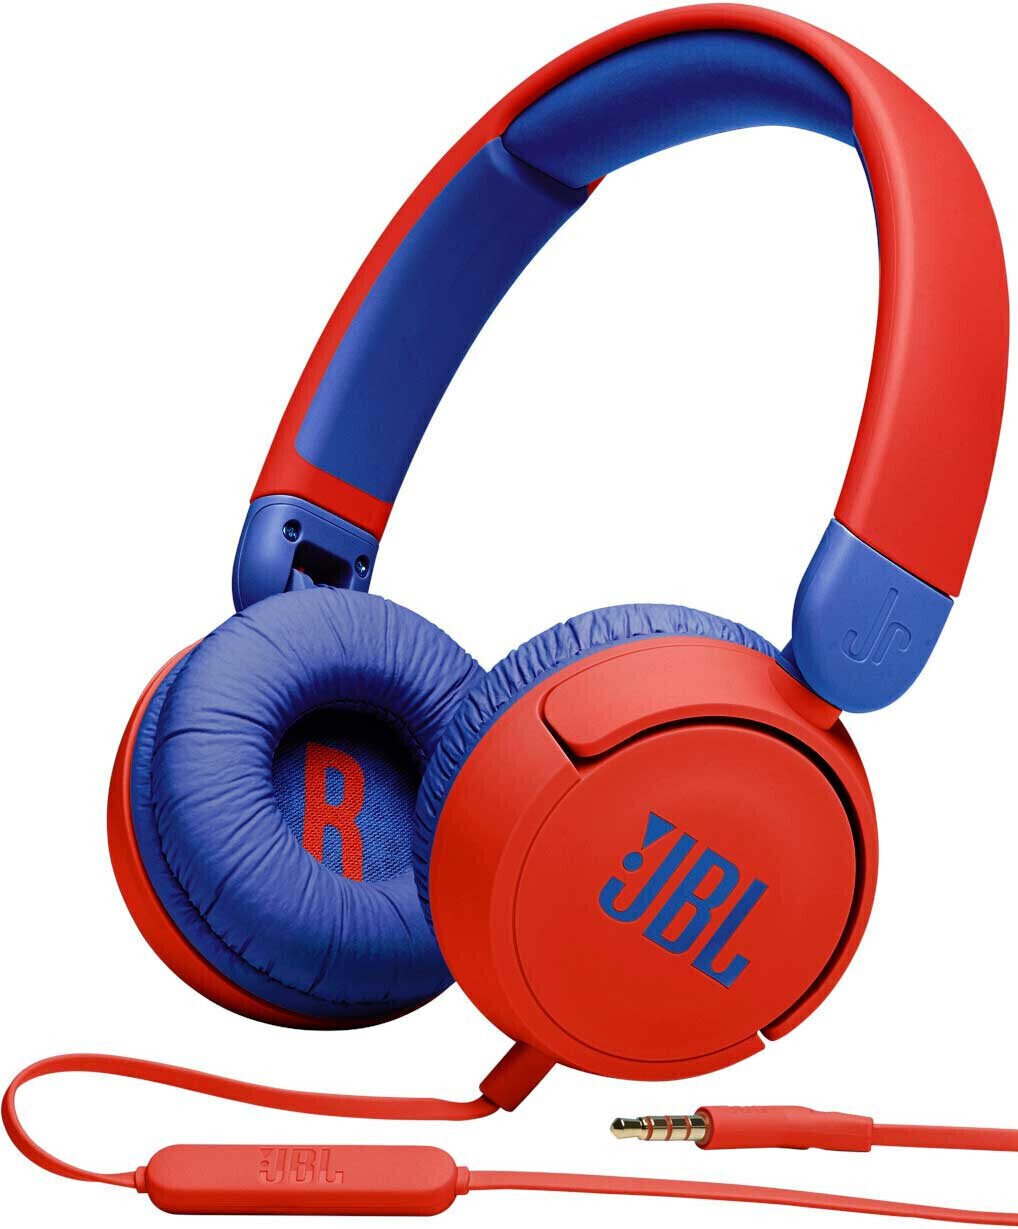 Kopfhörer für Kinder JBL JR310 Rot